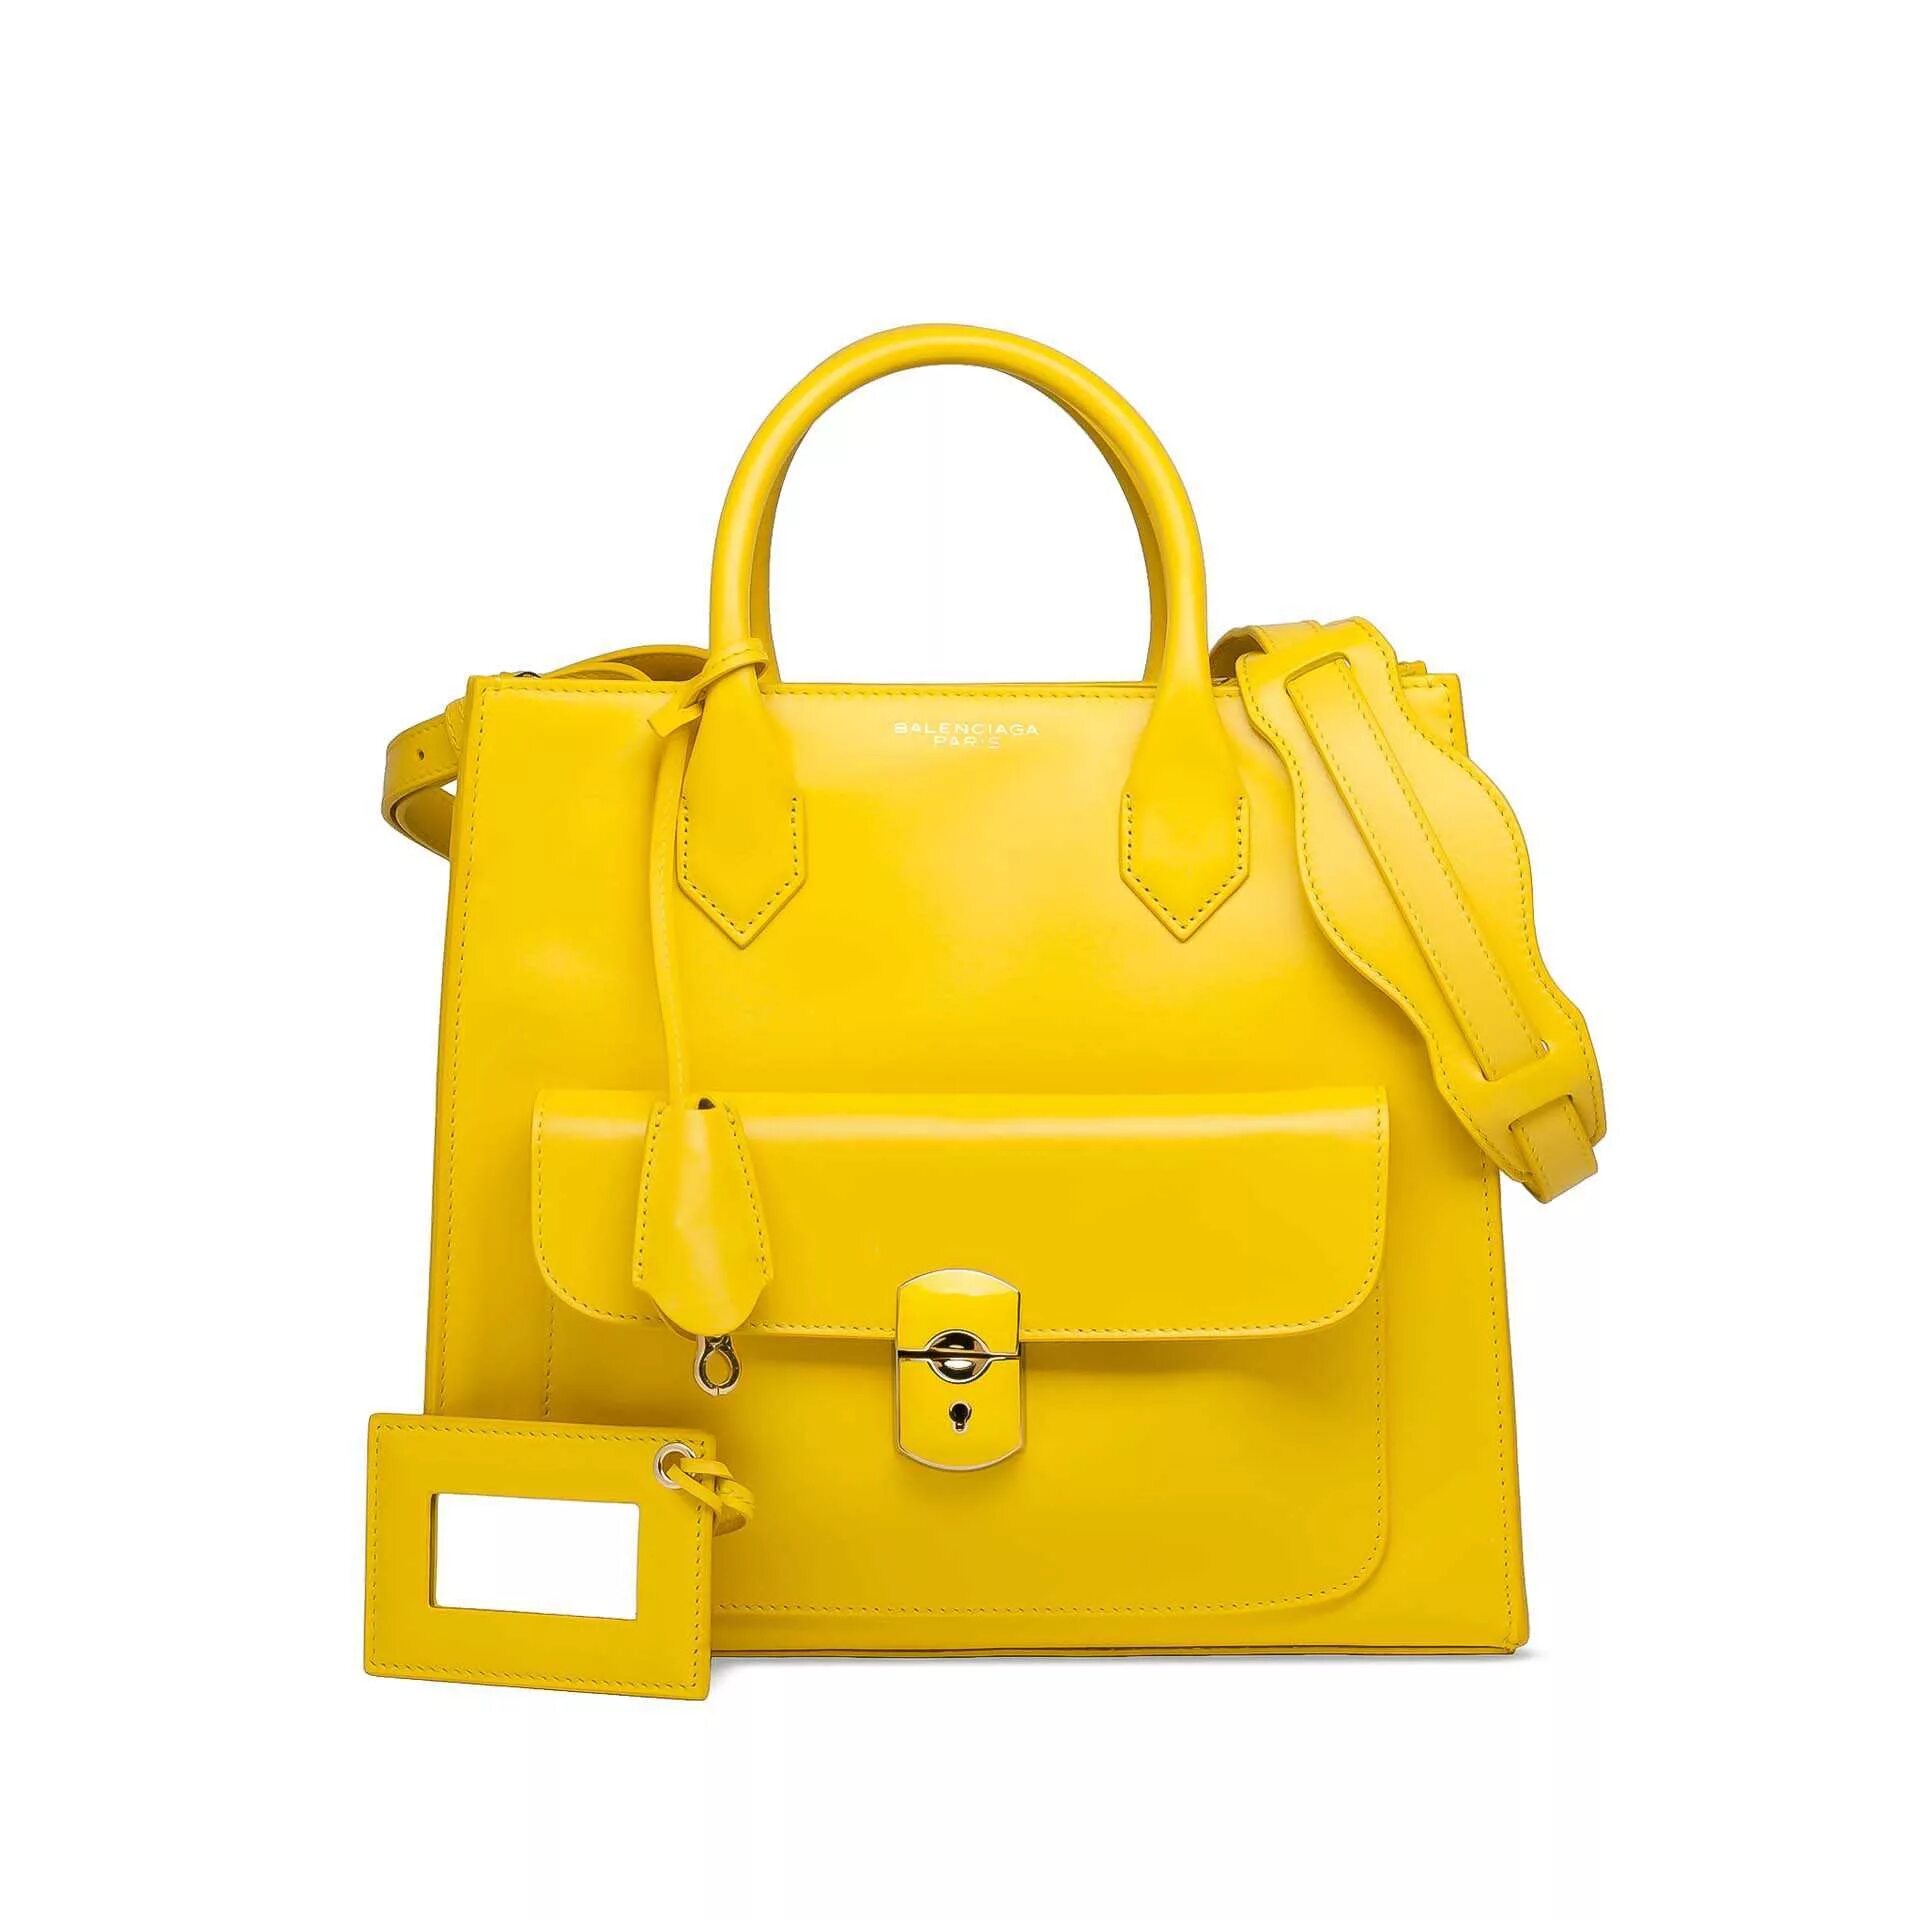 Где купить желтую. Сумки Баленсиага 2013. Желтая сумка Баленсиага. Сумка Елоу фэшн бэг. Balenciaga 2023 сумки желтая.